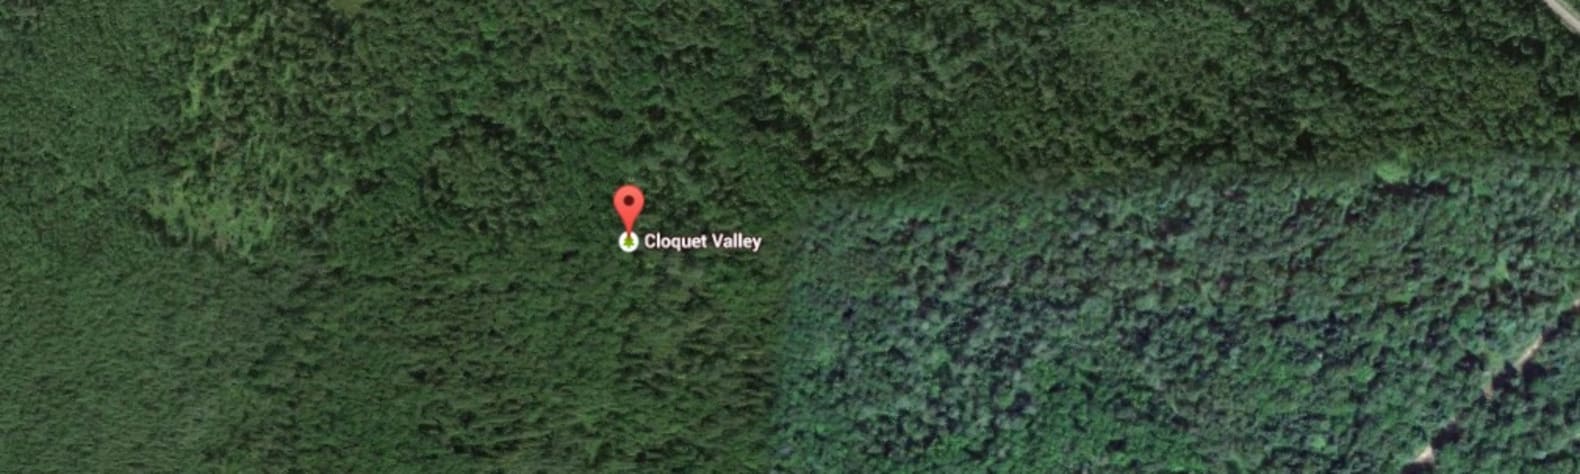 Cloquet Valley State Forest